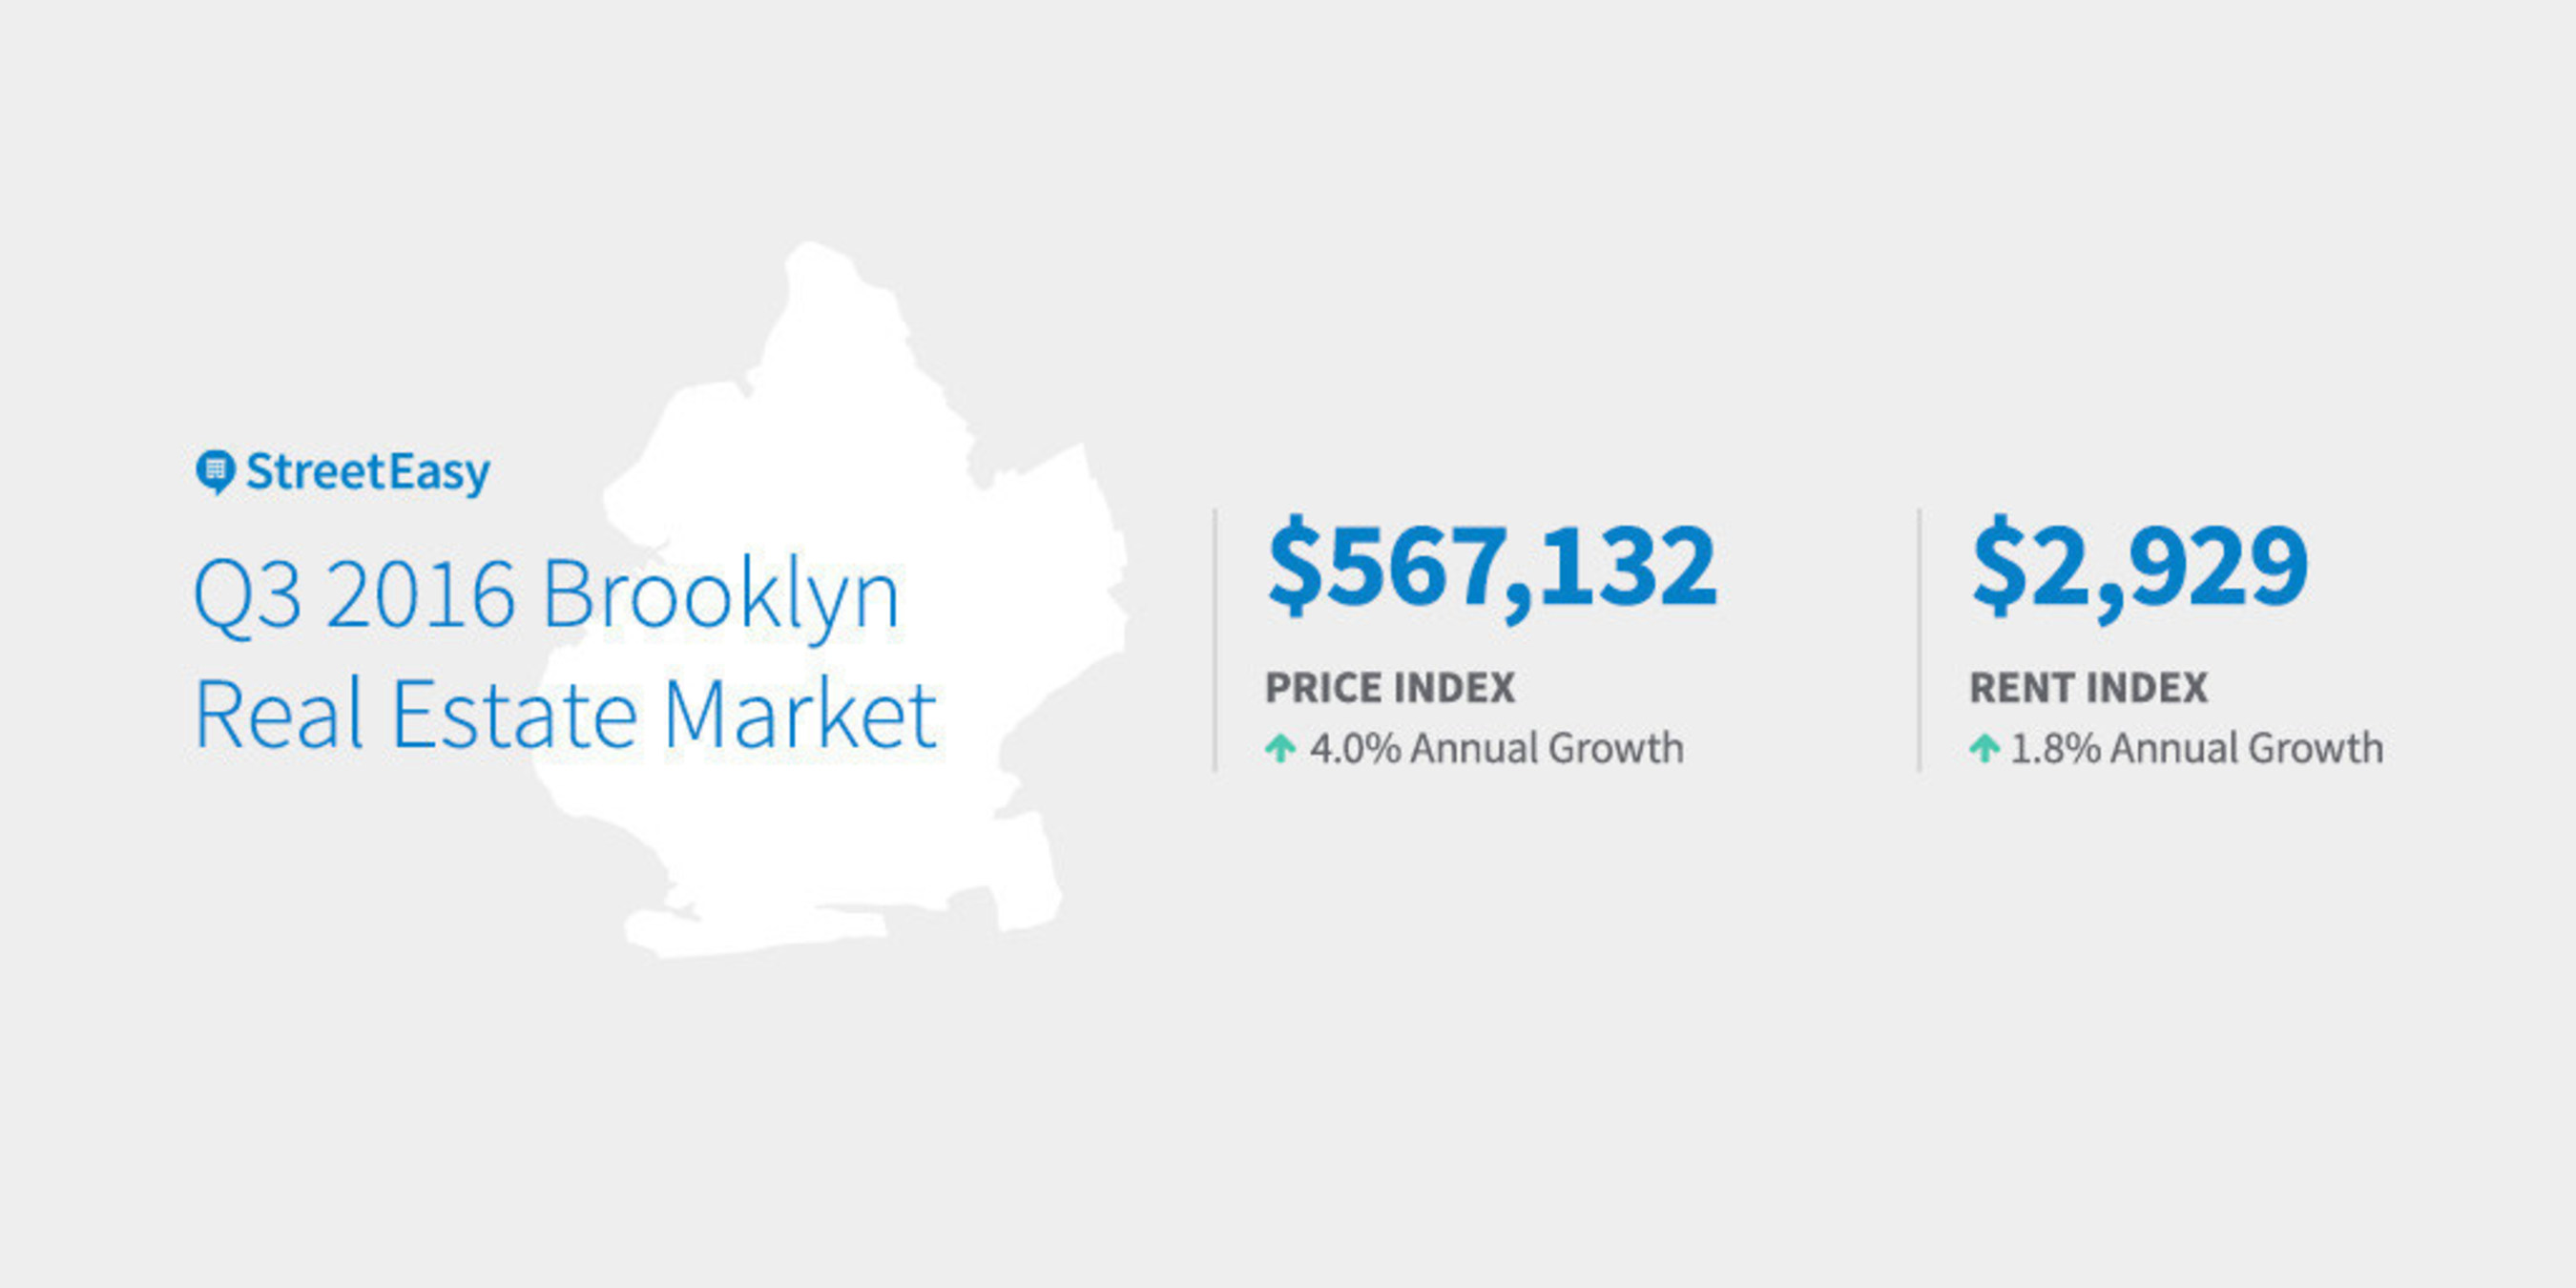 Q3 2016 Brooklyn Real Estate Market